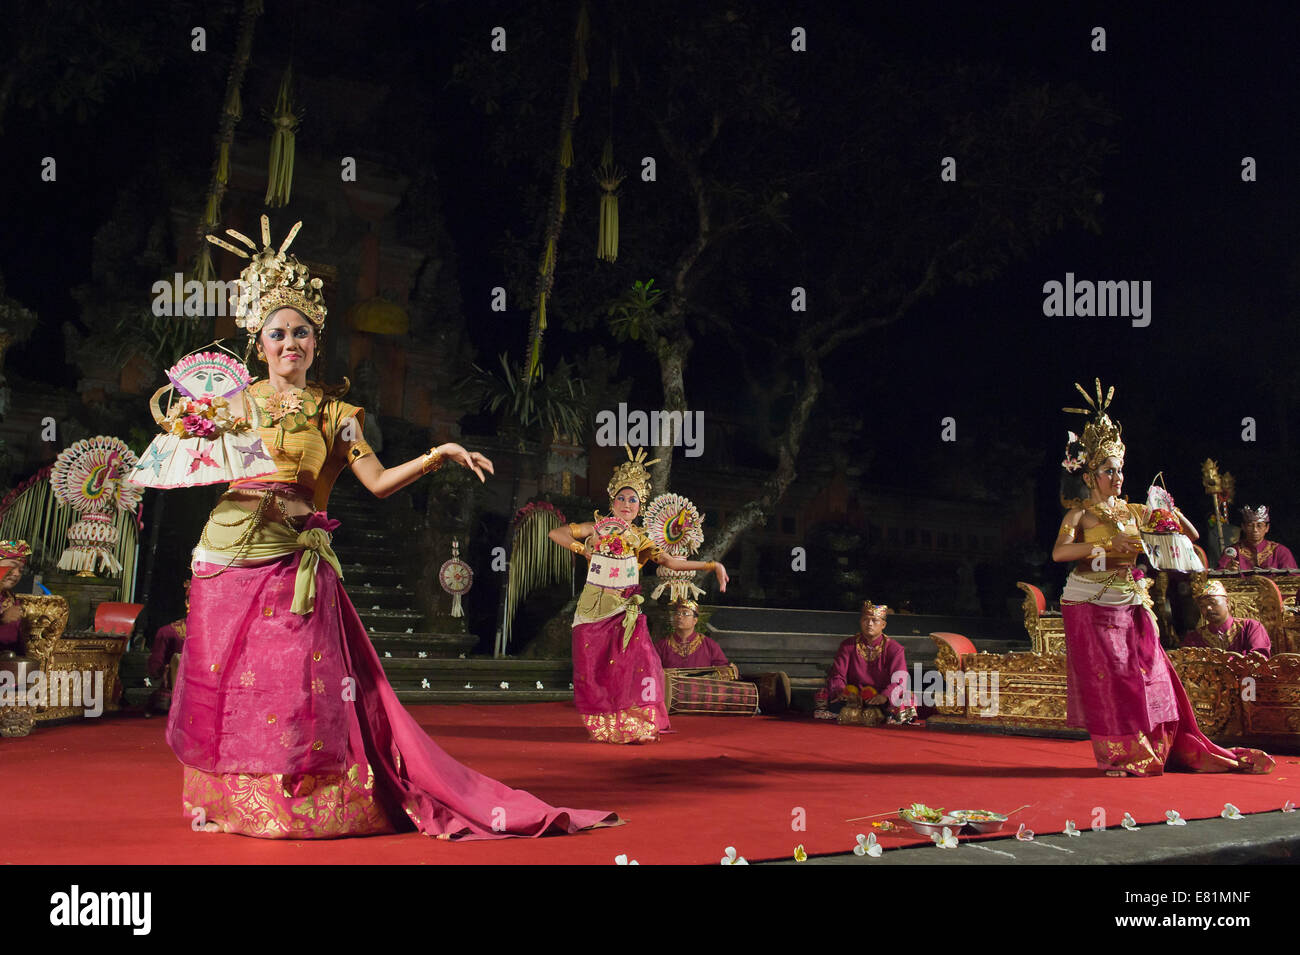 La lune, déesse Tari Penyambutan la danse, Puri Saraswati Temple, Ubud, Bali, Indonésie Banque D'Images